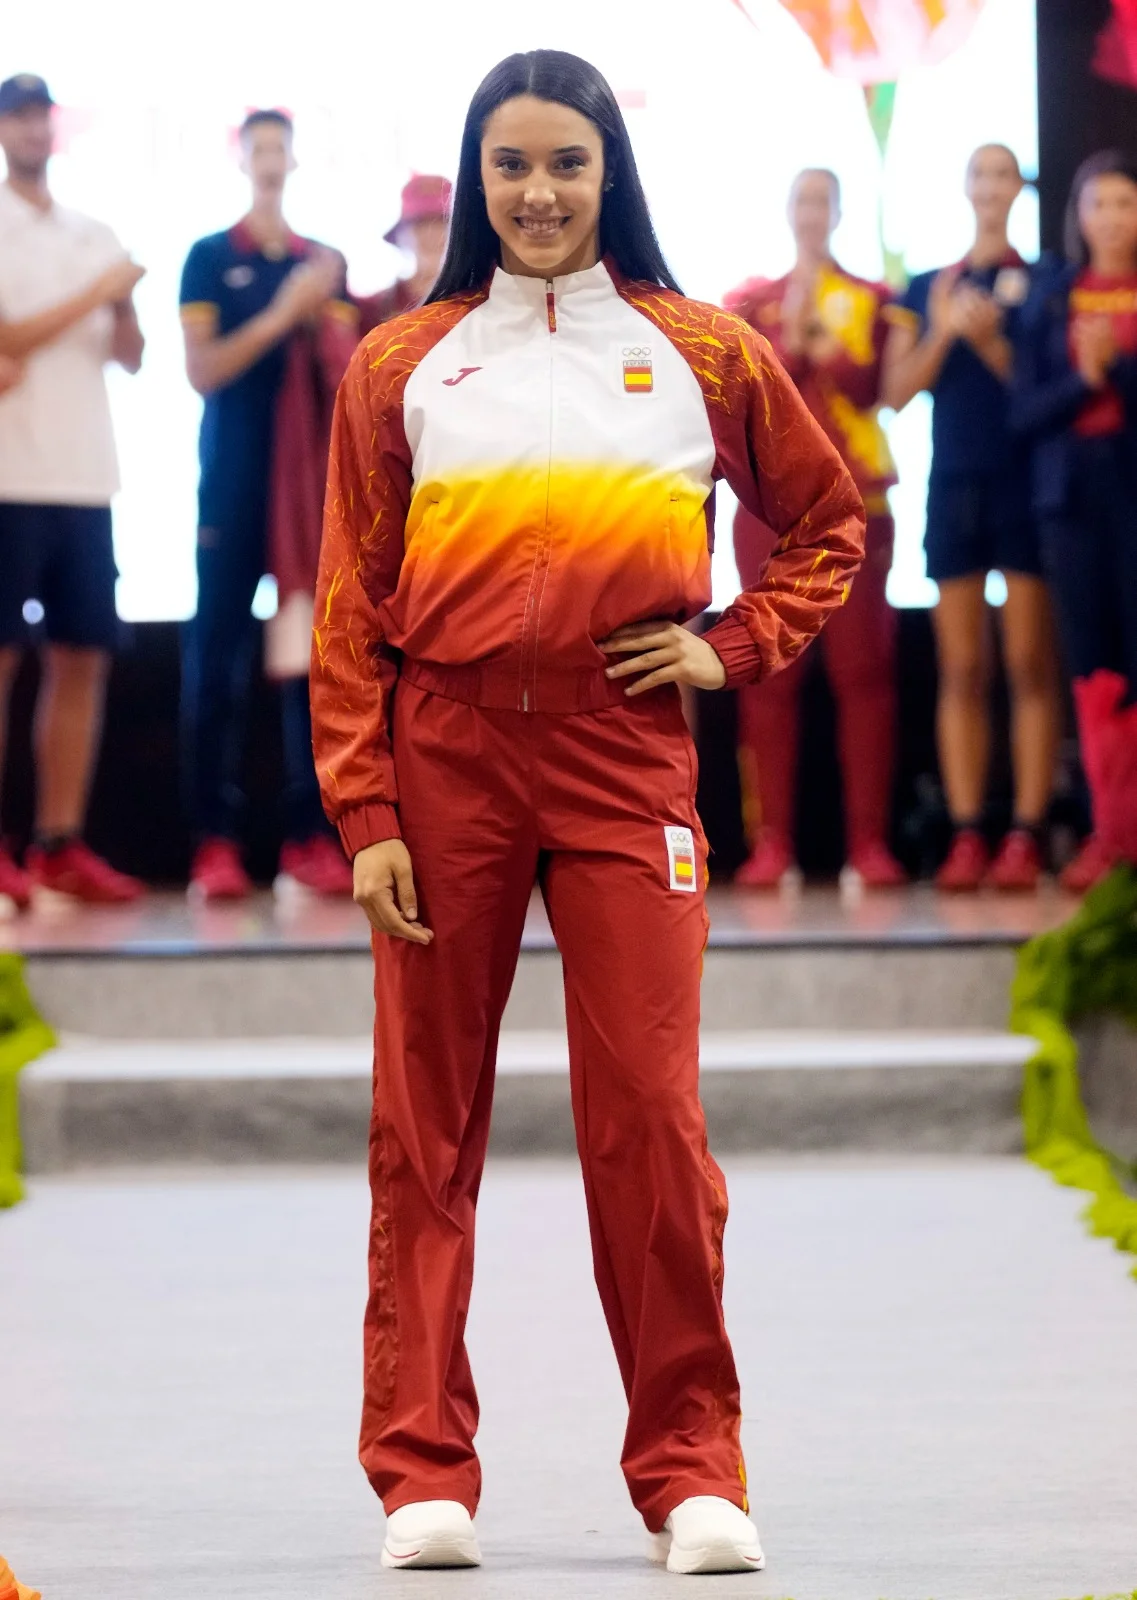 chandal uniforme seleccion espanola paris 2024 olimpiadas